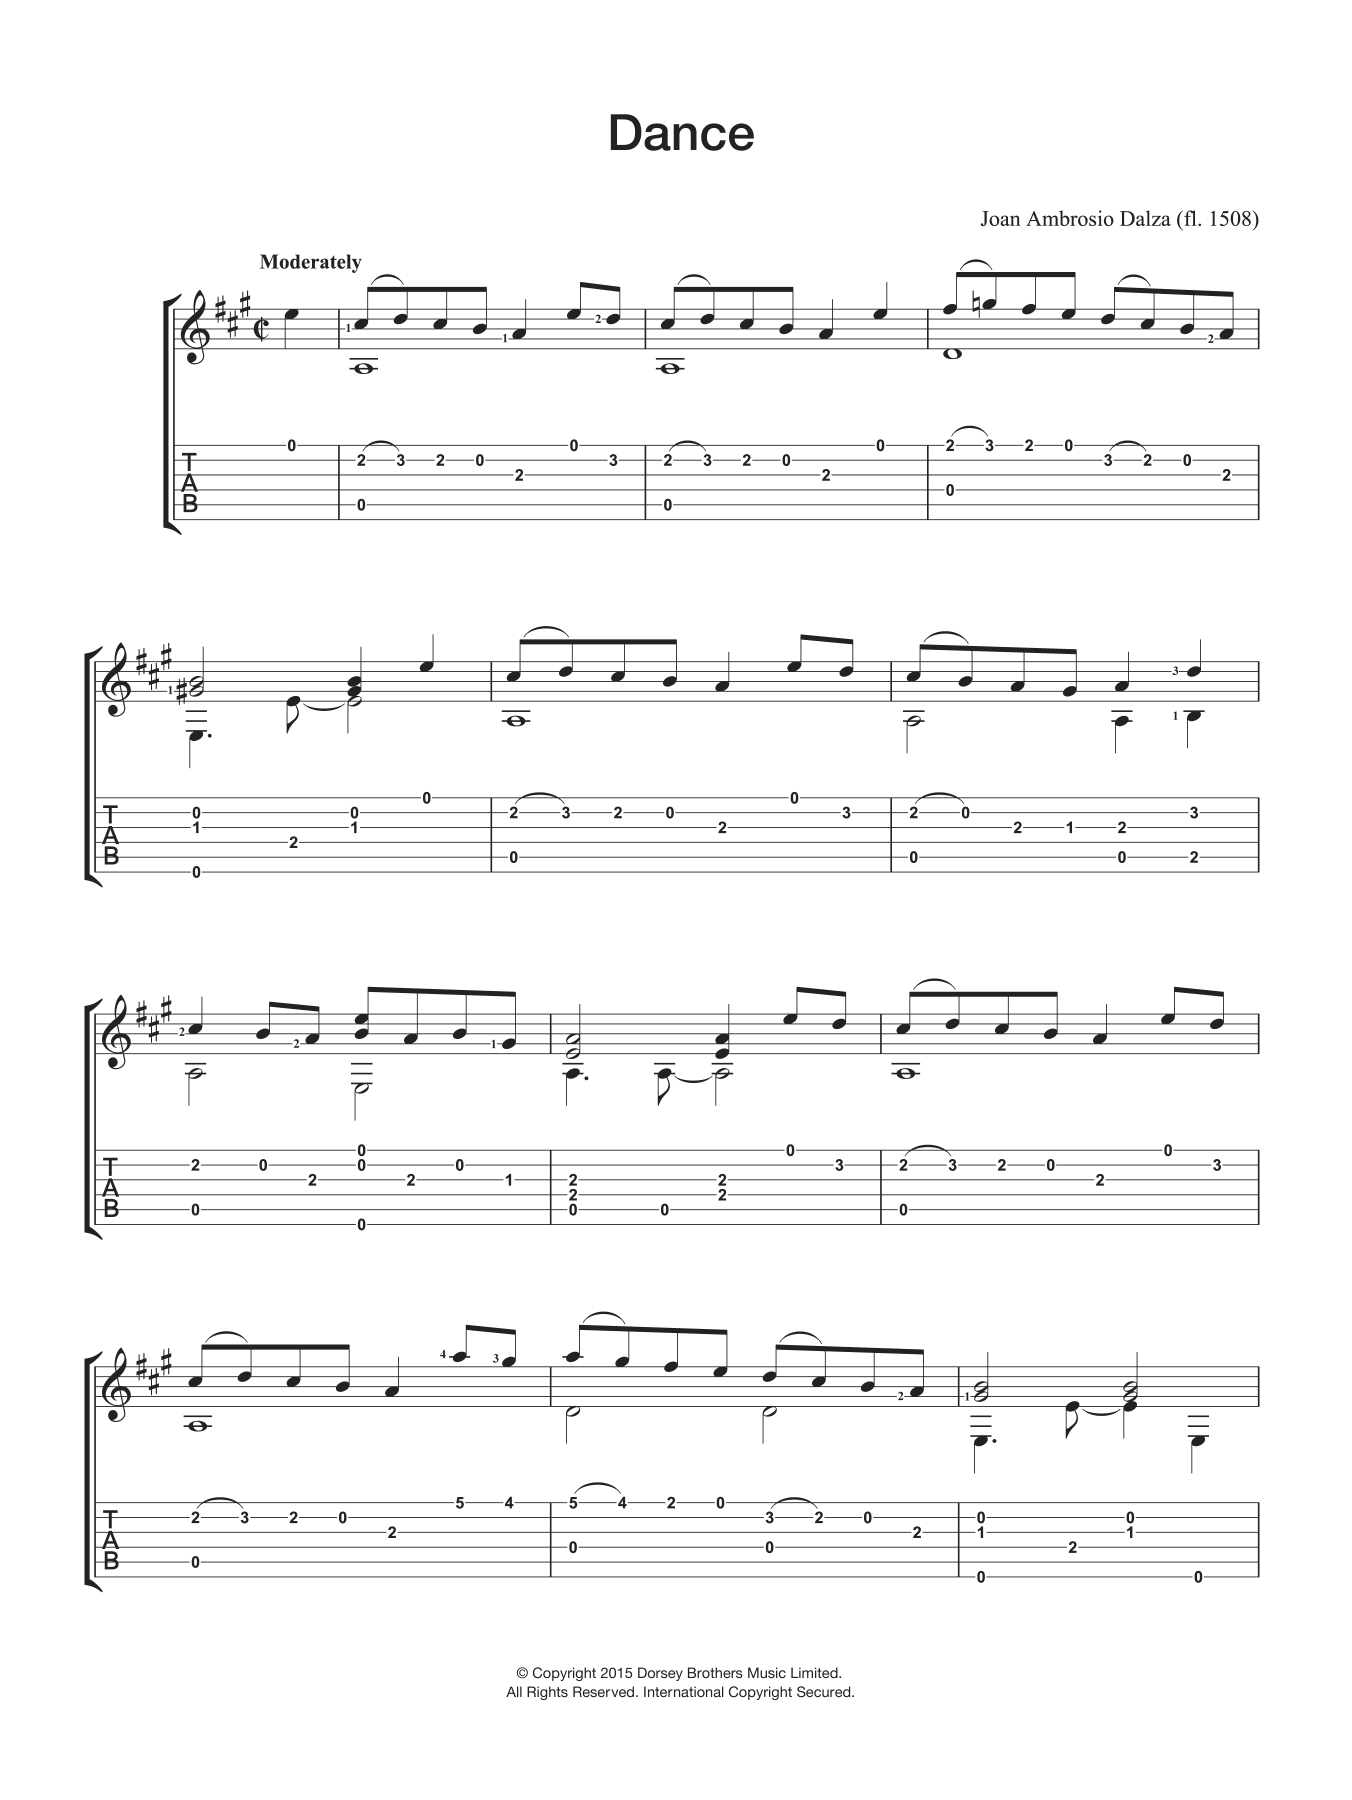 Joan Ambrosio Dalza Dance Sheet Music Notes & Chords for Guitar - Download or Print PDF